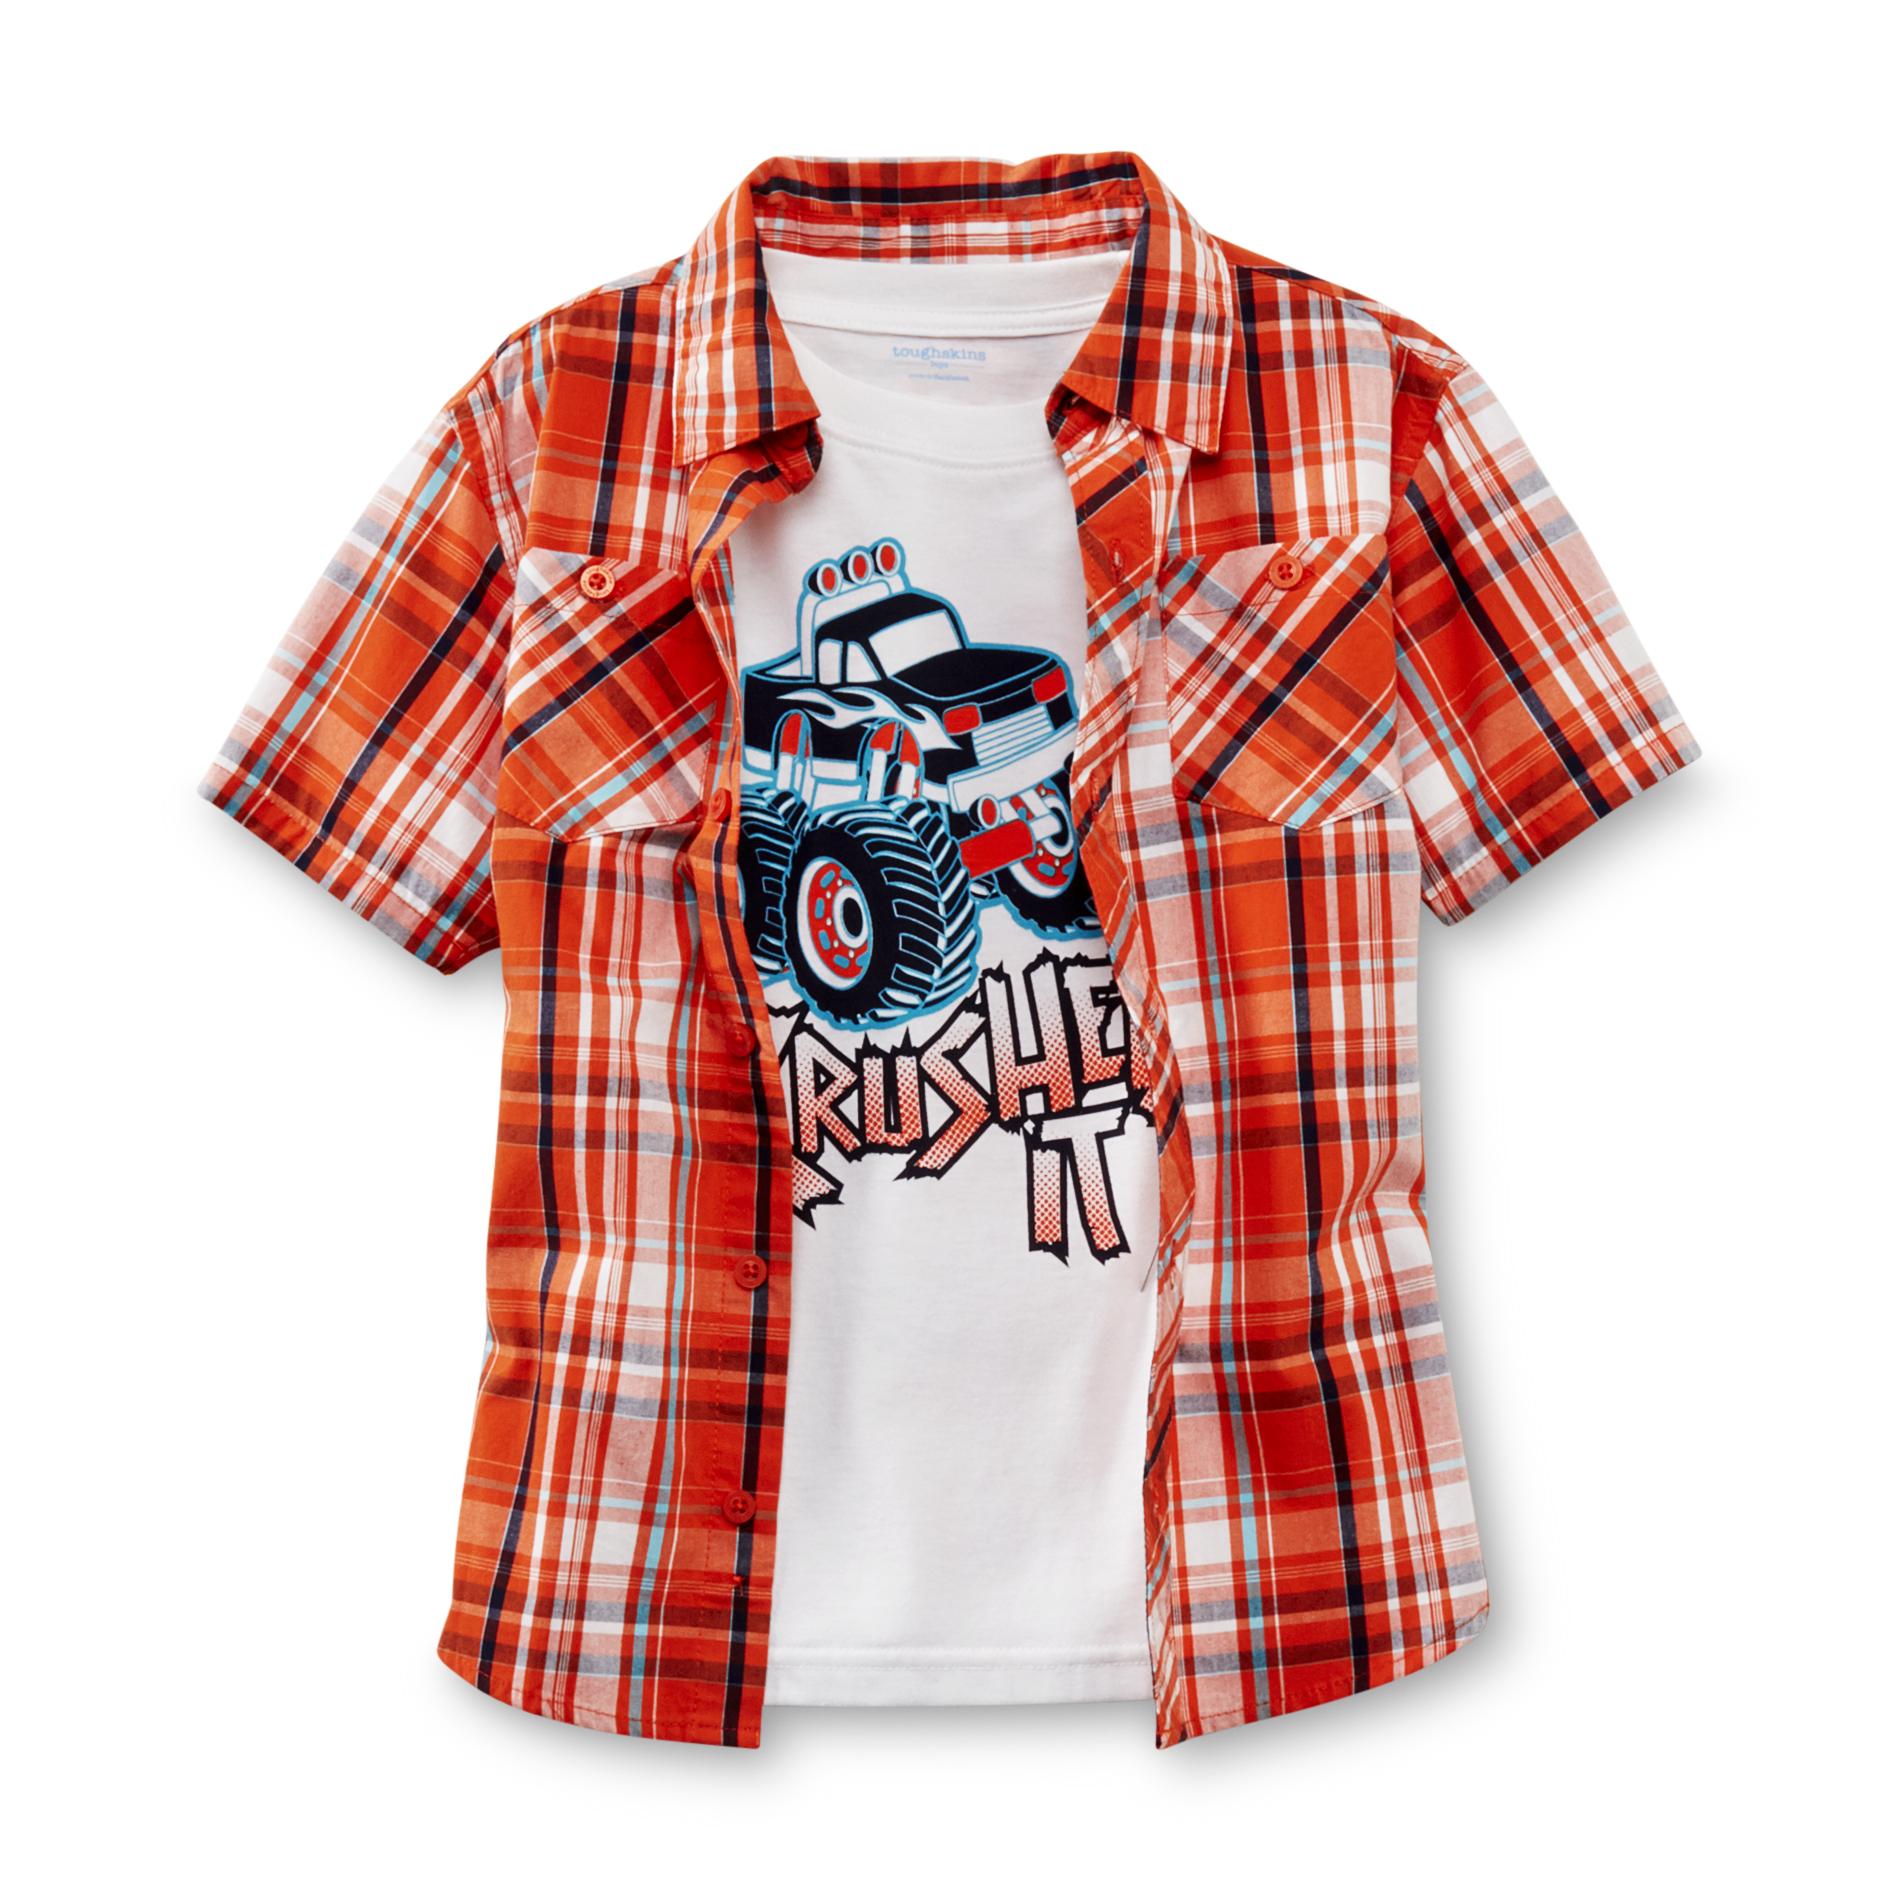 Toughskins Boy's Button-Front Shirt & Graphic T-Shirt - Plaid